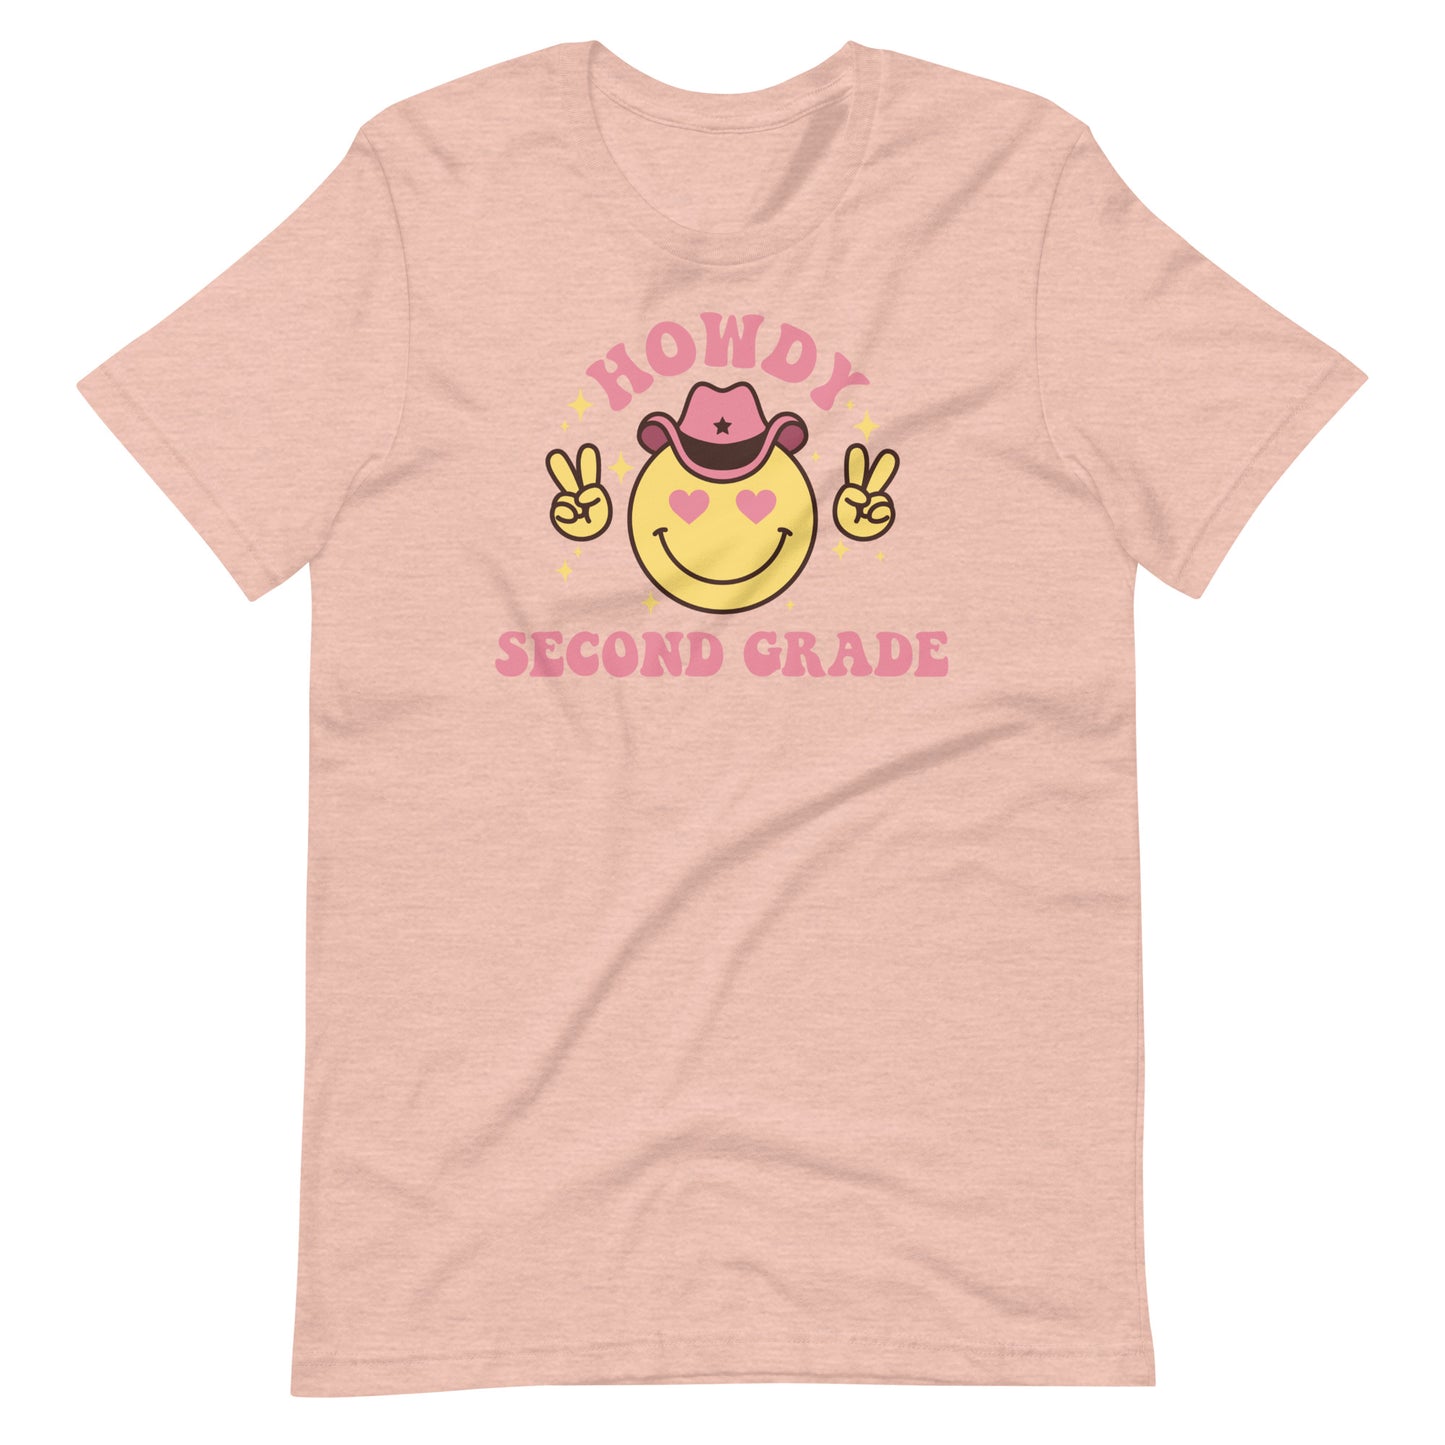 Second Grade Teacher Shirt Smile Howdy Pink Cowboy Design